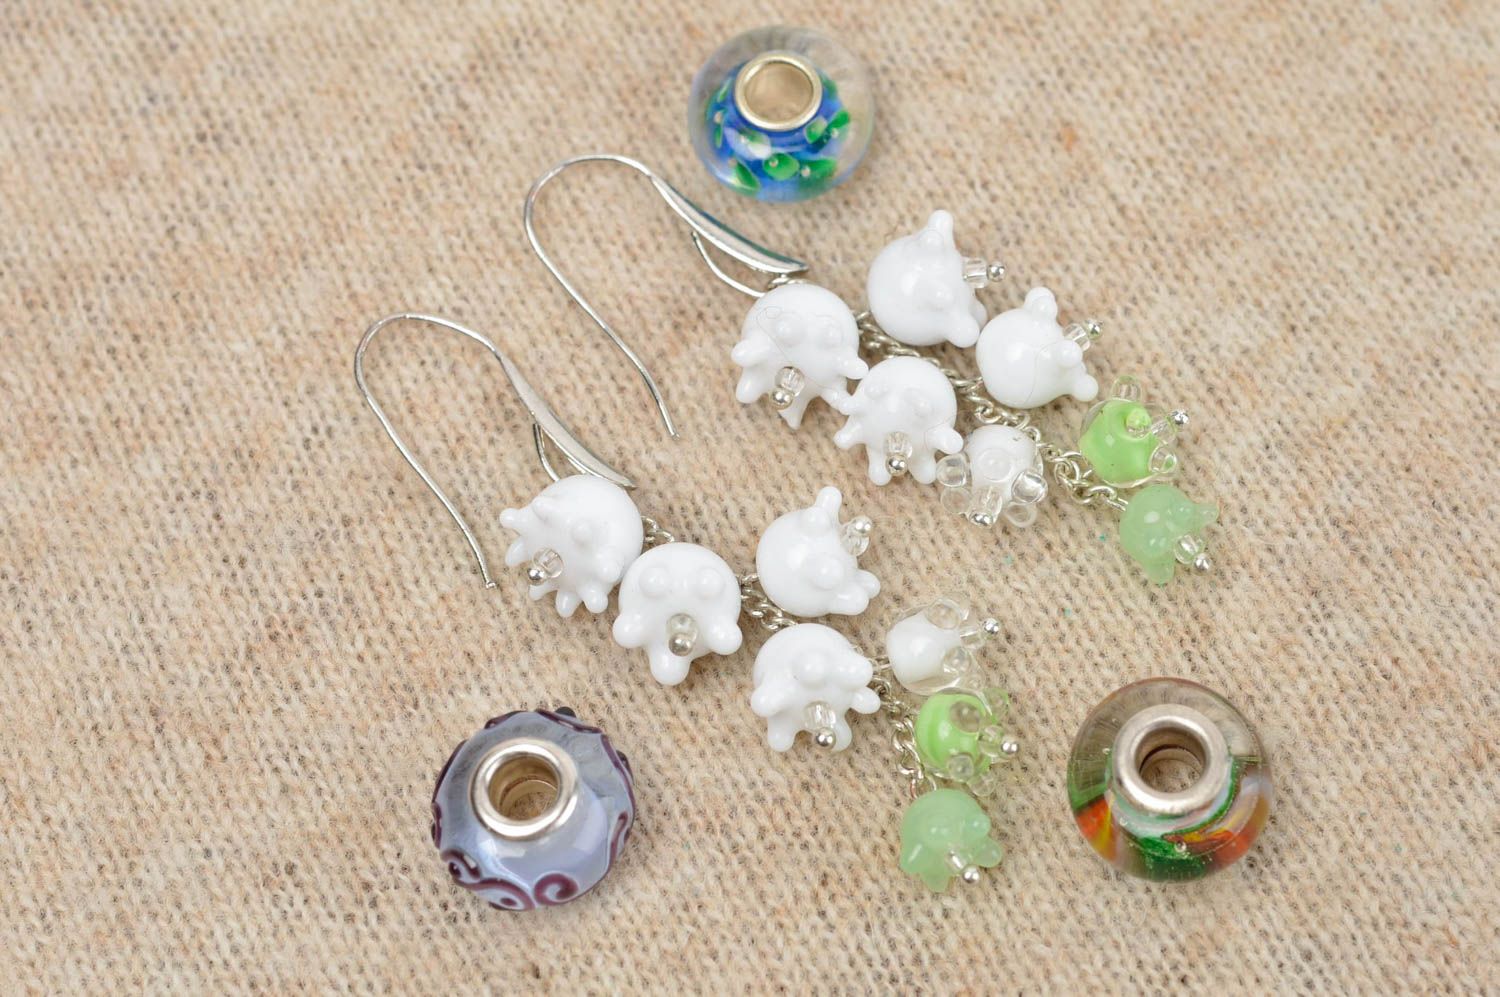 White elegant earrings handmade earrings with charms stylish glass jewelry  photo 1